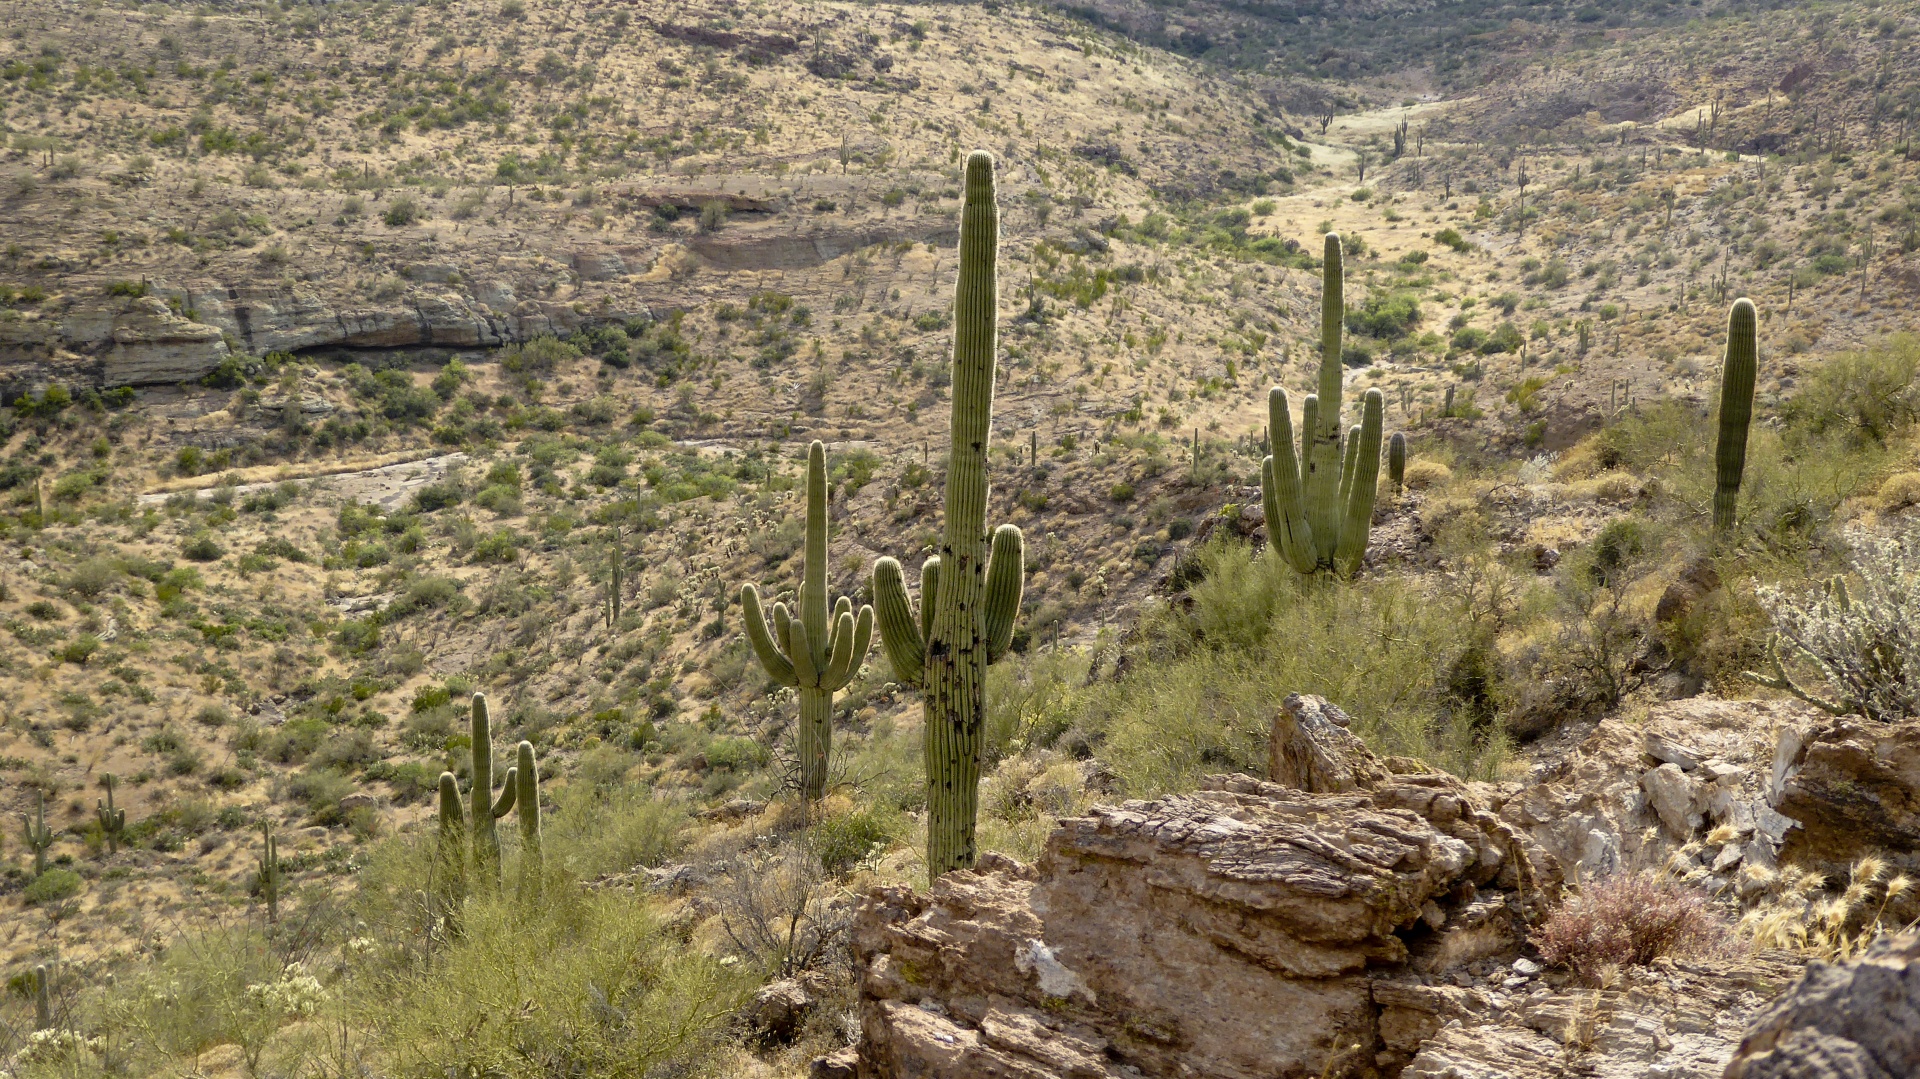 mountainous landscape of Saguaro cacti